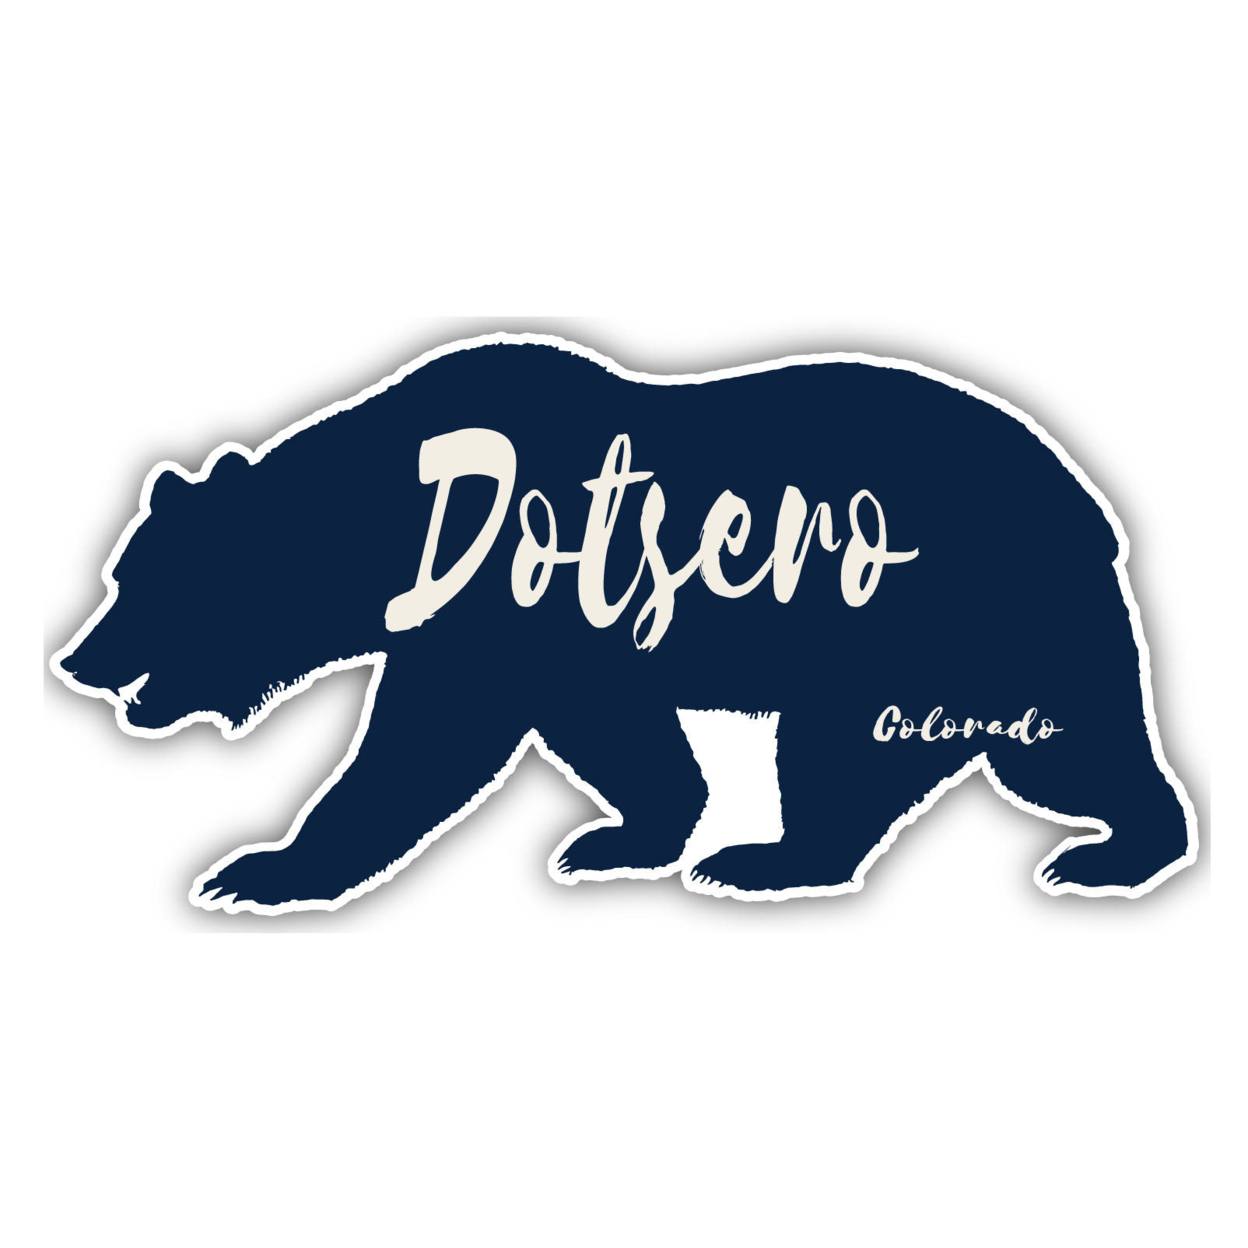 Dotsero Colorado Souvenir Decorative Stickers (Choose Theme And Size) - Single Unit, 10-Inch, Bear